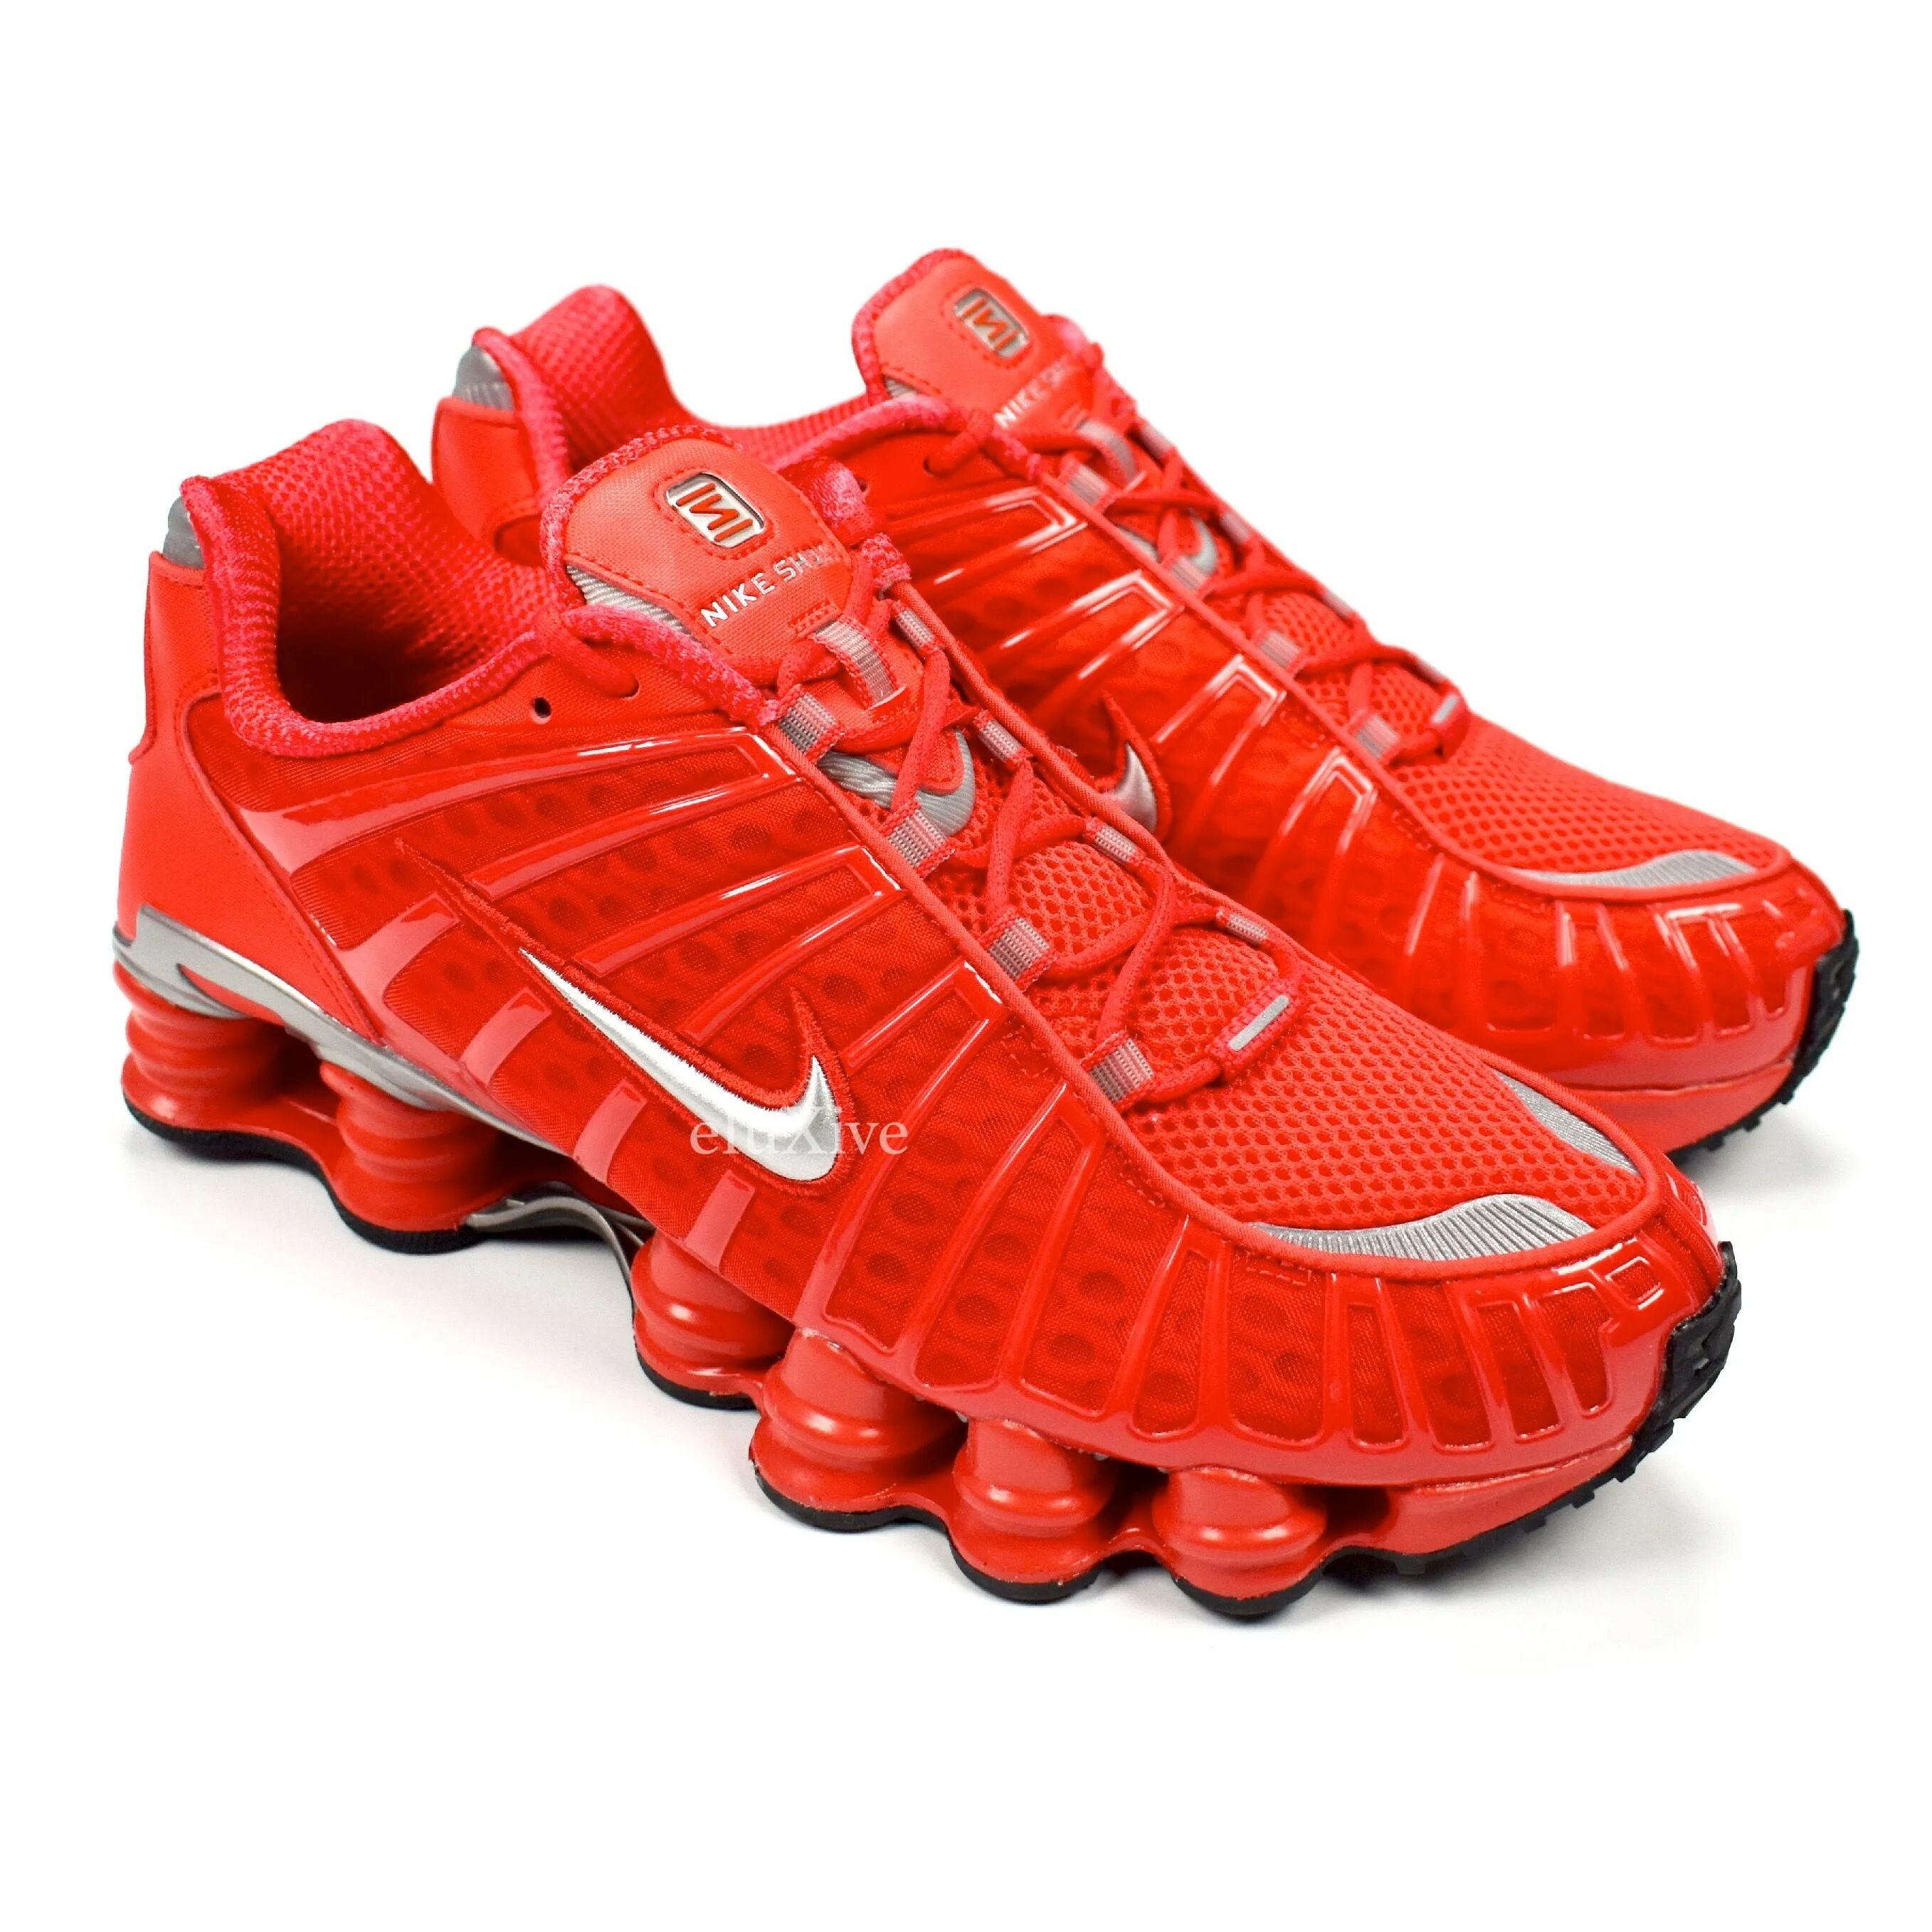 Nike shox tl мужские. Nike Shox TL Red. Nike Shox Speed Red. Nike Shox TL красные. Nike Shox 2002 Red.